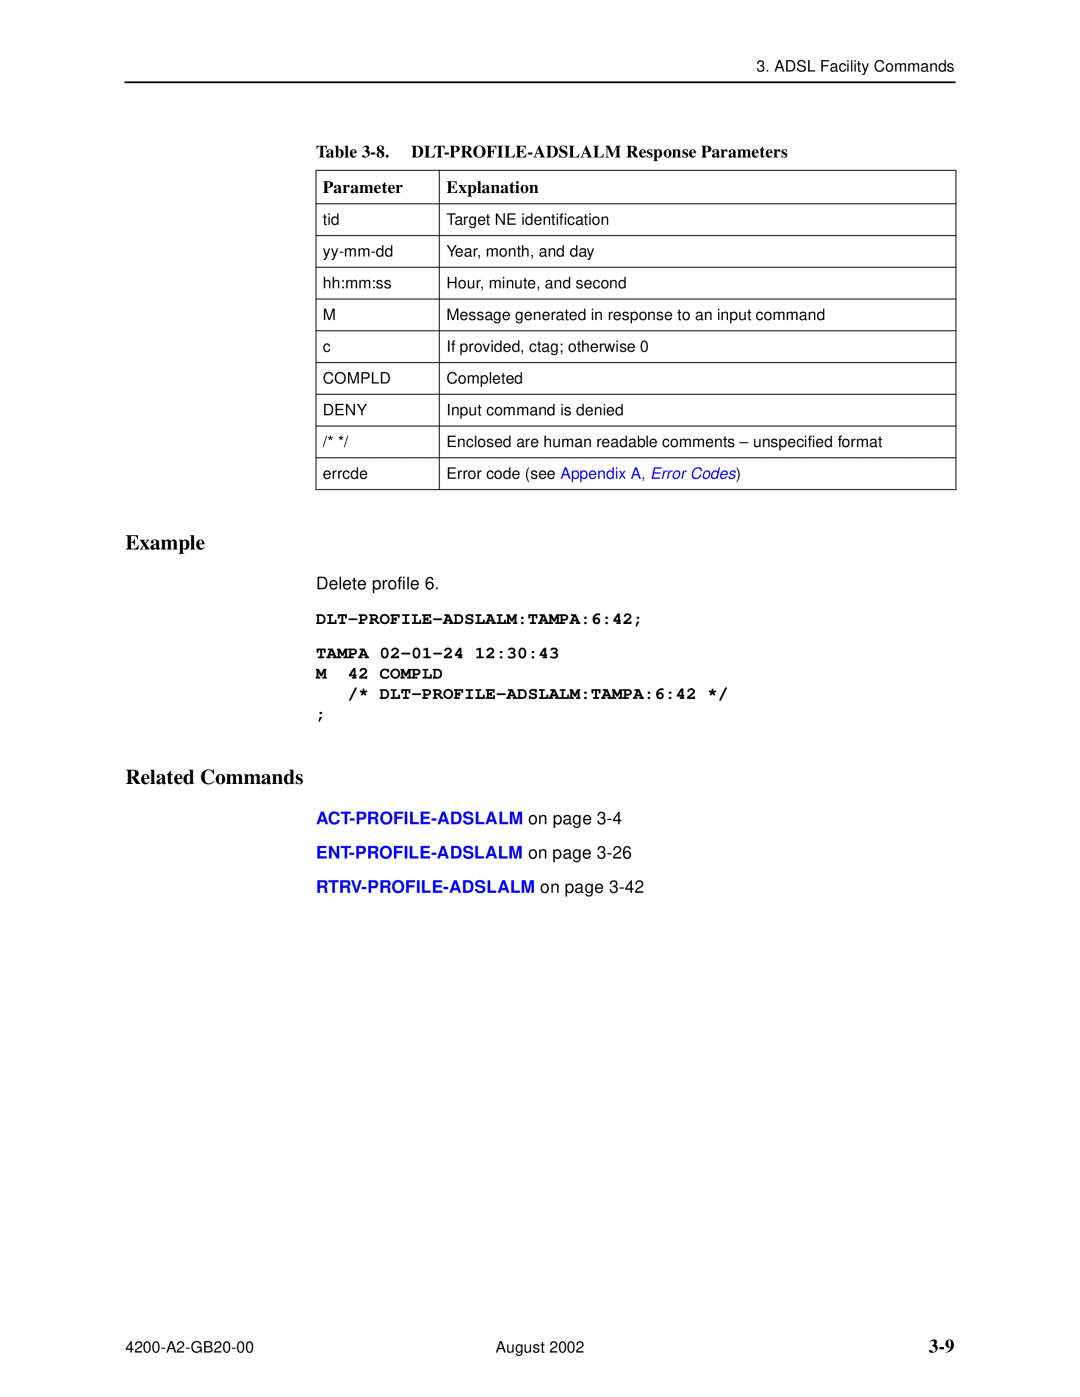 Paradyne 4200 8. DLT-PROFILE-ADSLALM Response Parameters, DLT-PROFILE-ADSLALMTAMPA642 TAMPA 02-01-24 M 42 COMPLD, Example 